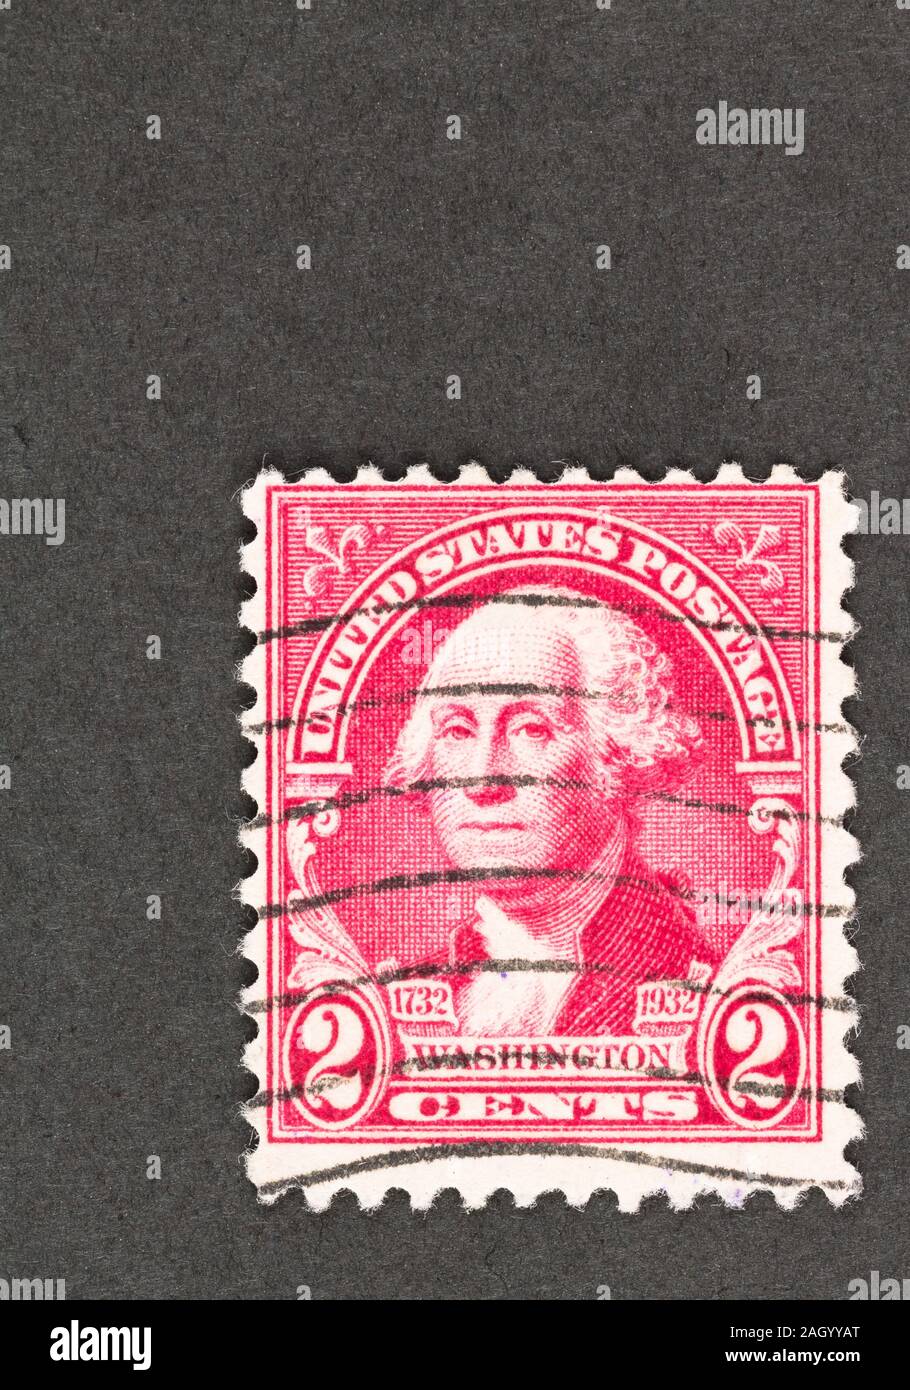 1932 George Washington 2 cent Stamp